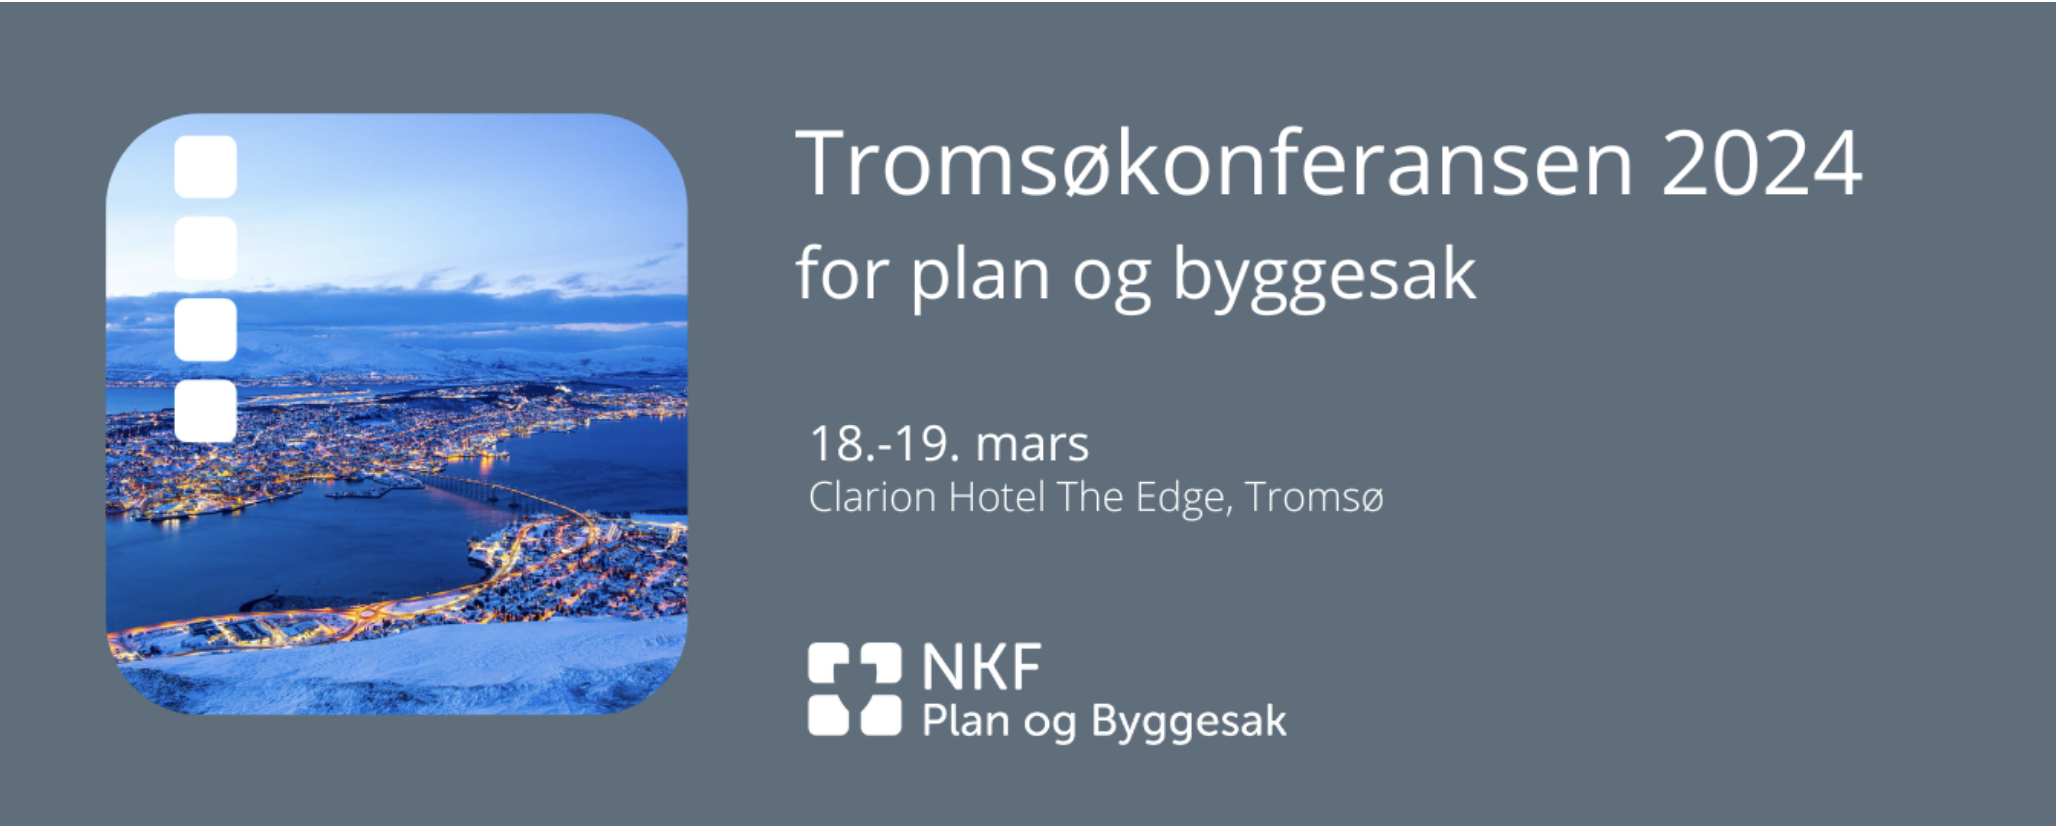 Tromsokonferansen 24 Header.png